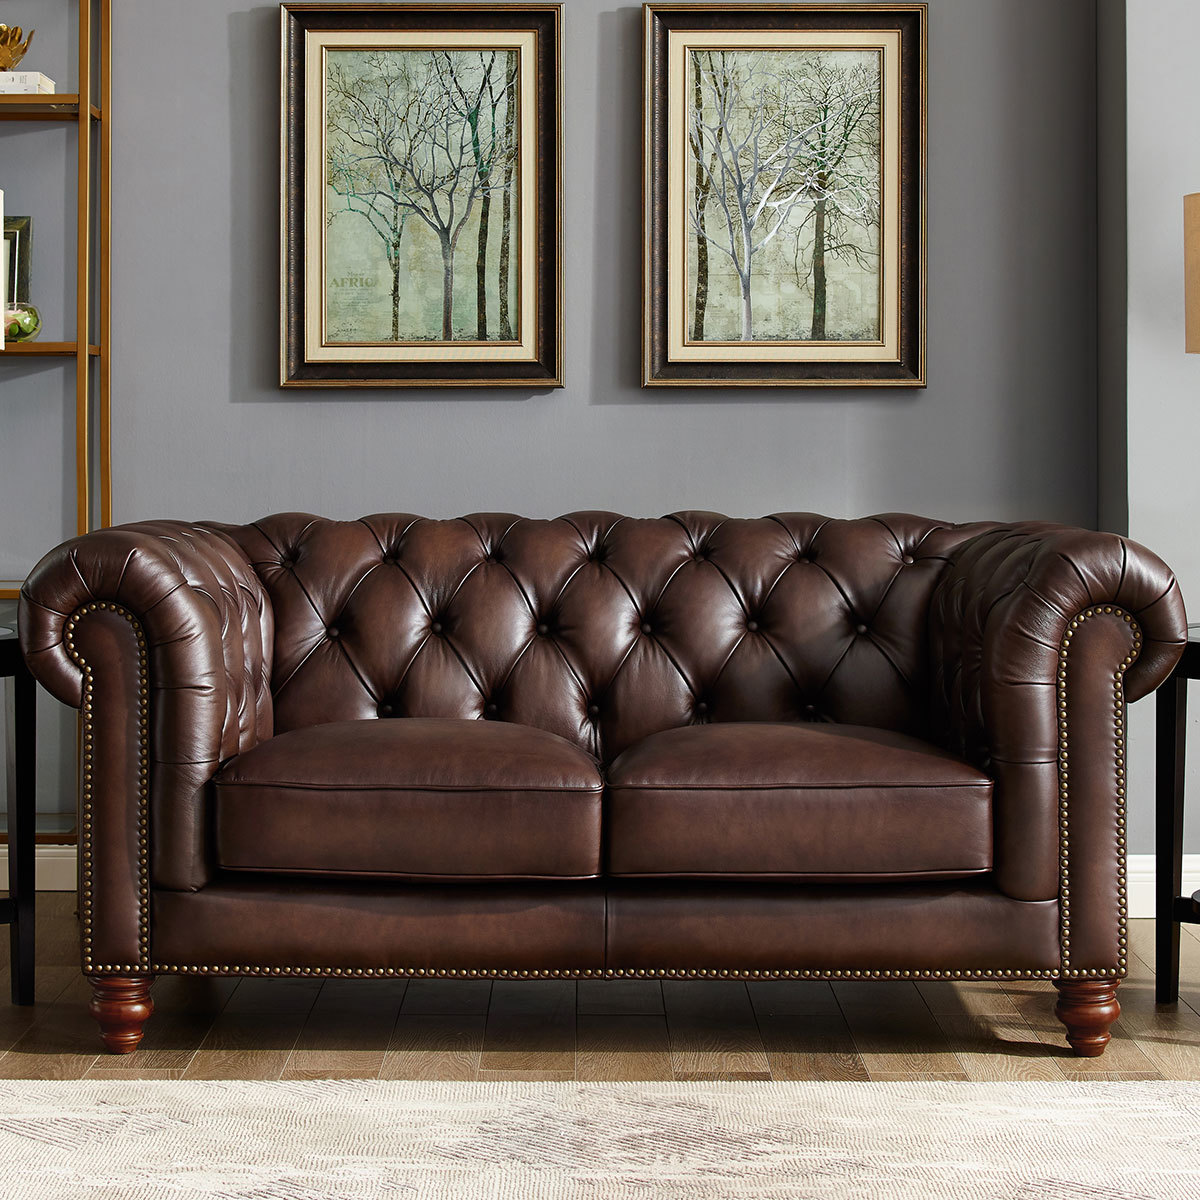 Allington 2 Seater Brown Leather Chesterfield Sofa Costco UK